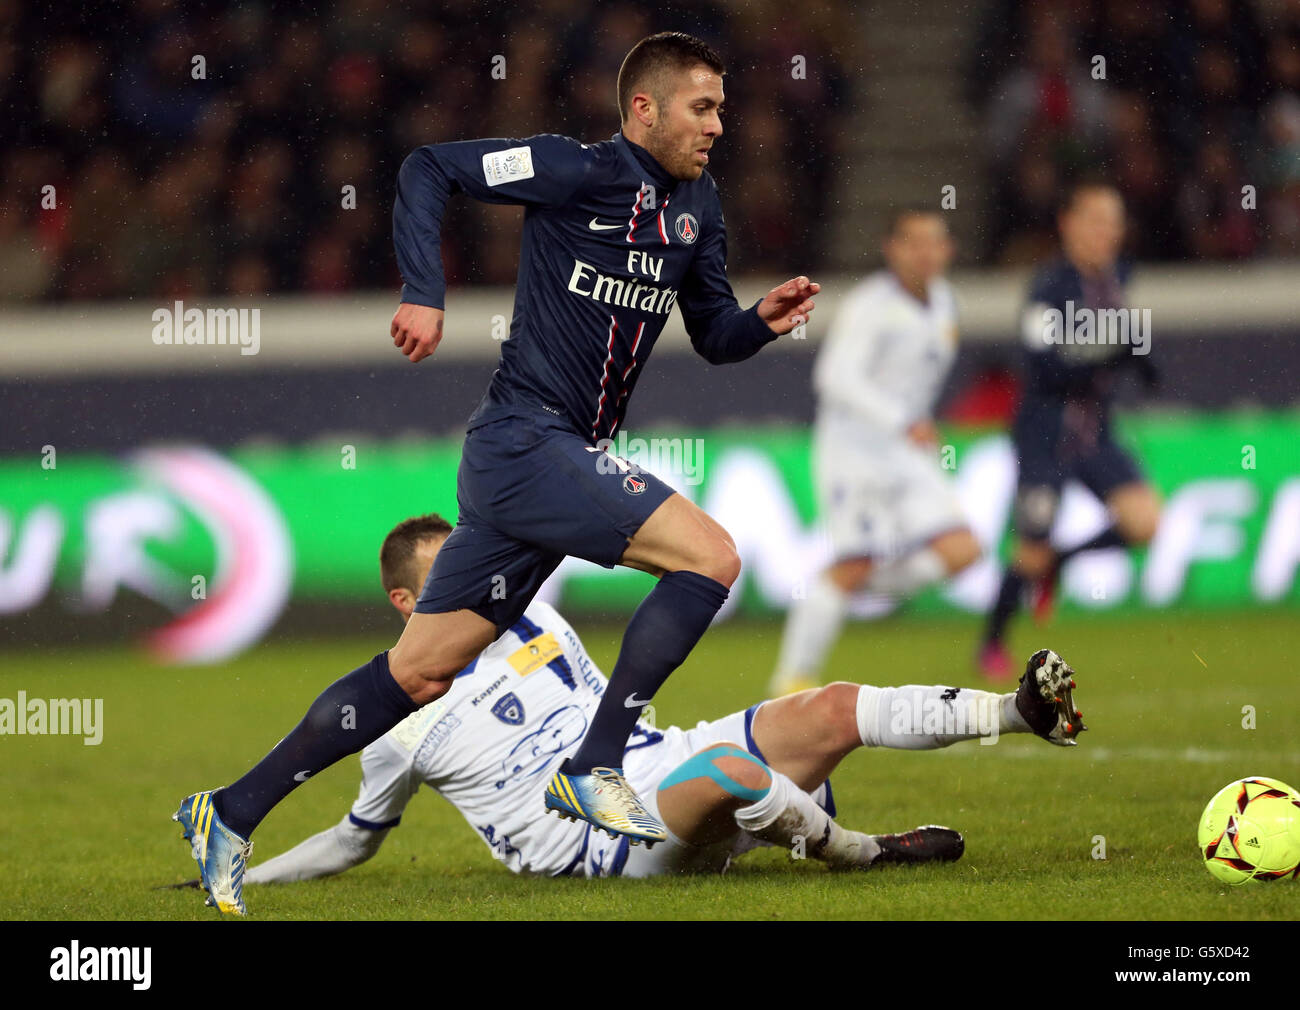 Fußball - Ligue One - Paris Saint-Germain / Bastia - Parc des Princes. Jeremy Menez von Paris Saint-Germain (rechts) und Julien Sable von Bastia (links) kämpfen um den Ball Stockfoto